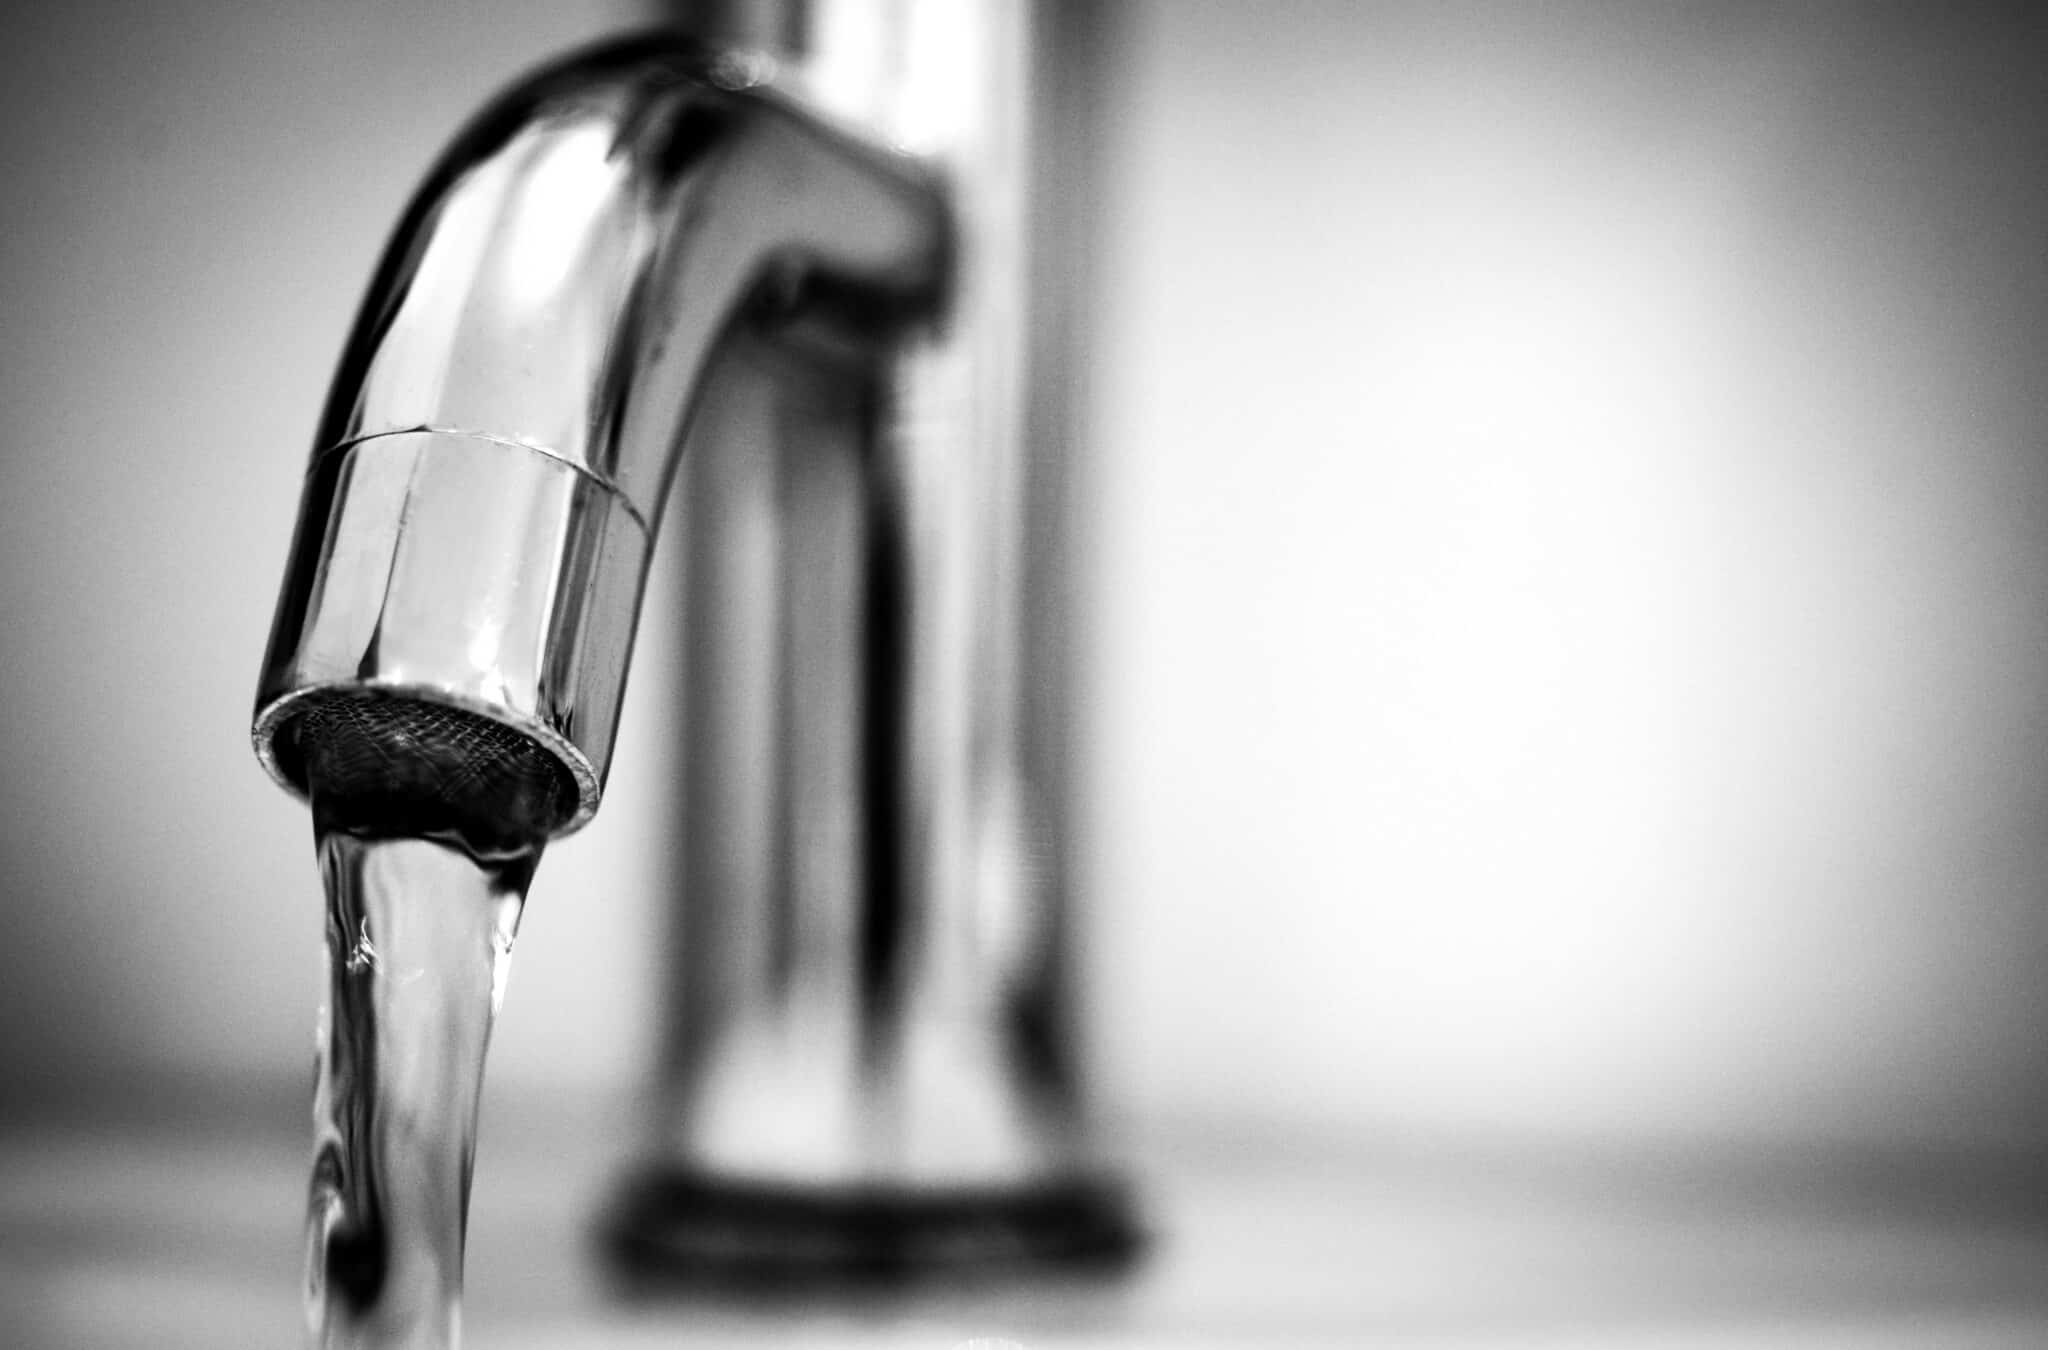 Up close photo of a faucet